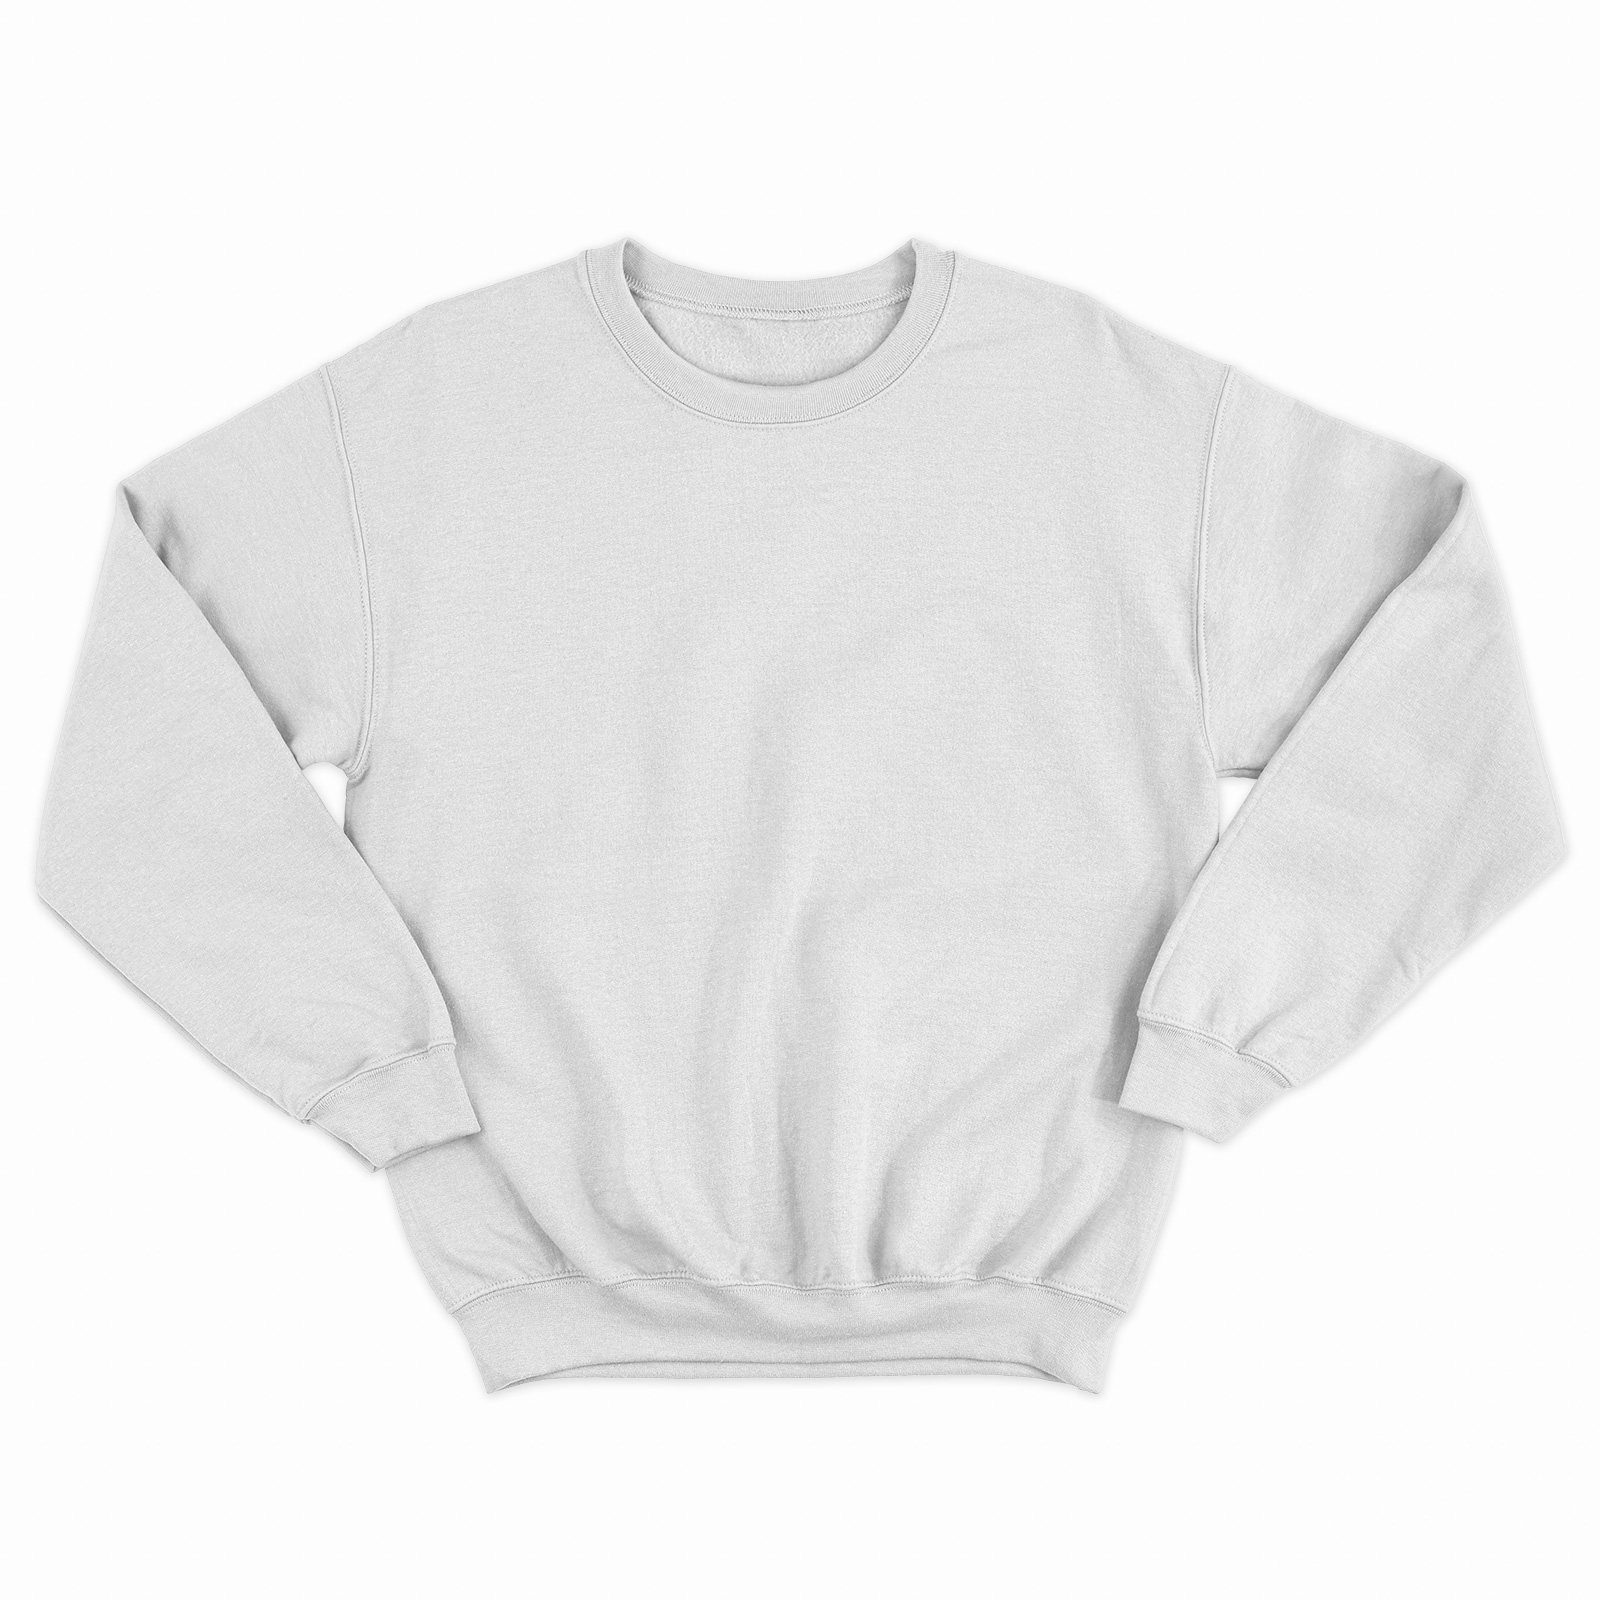 white crewneck sweatshirt template